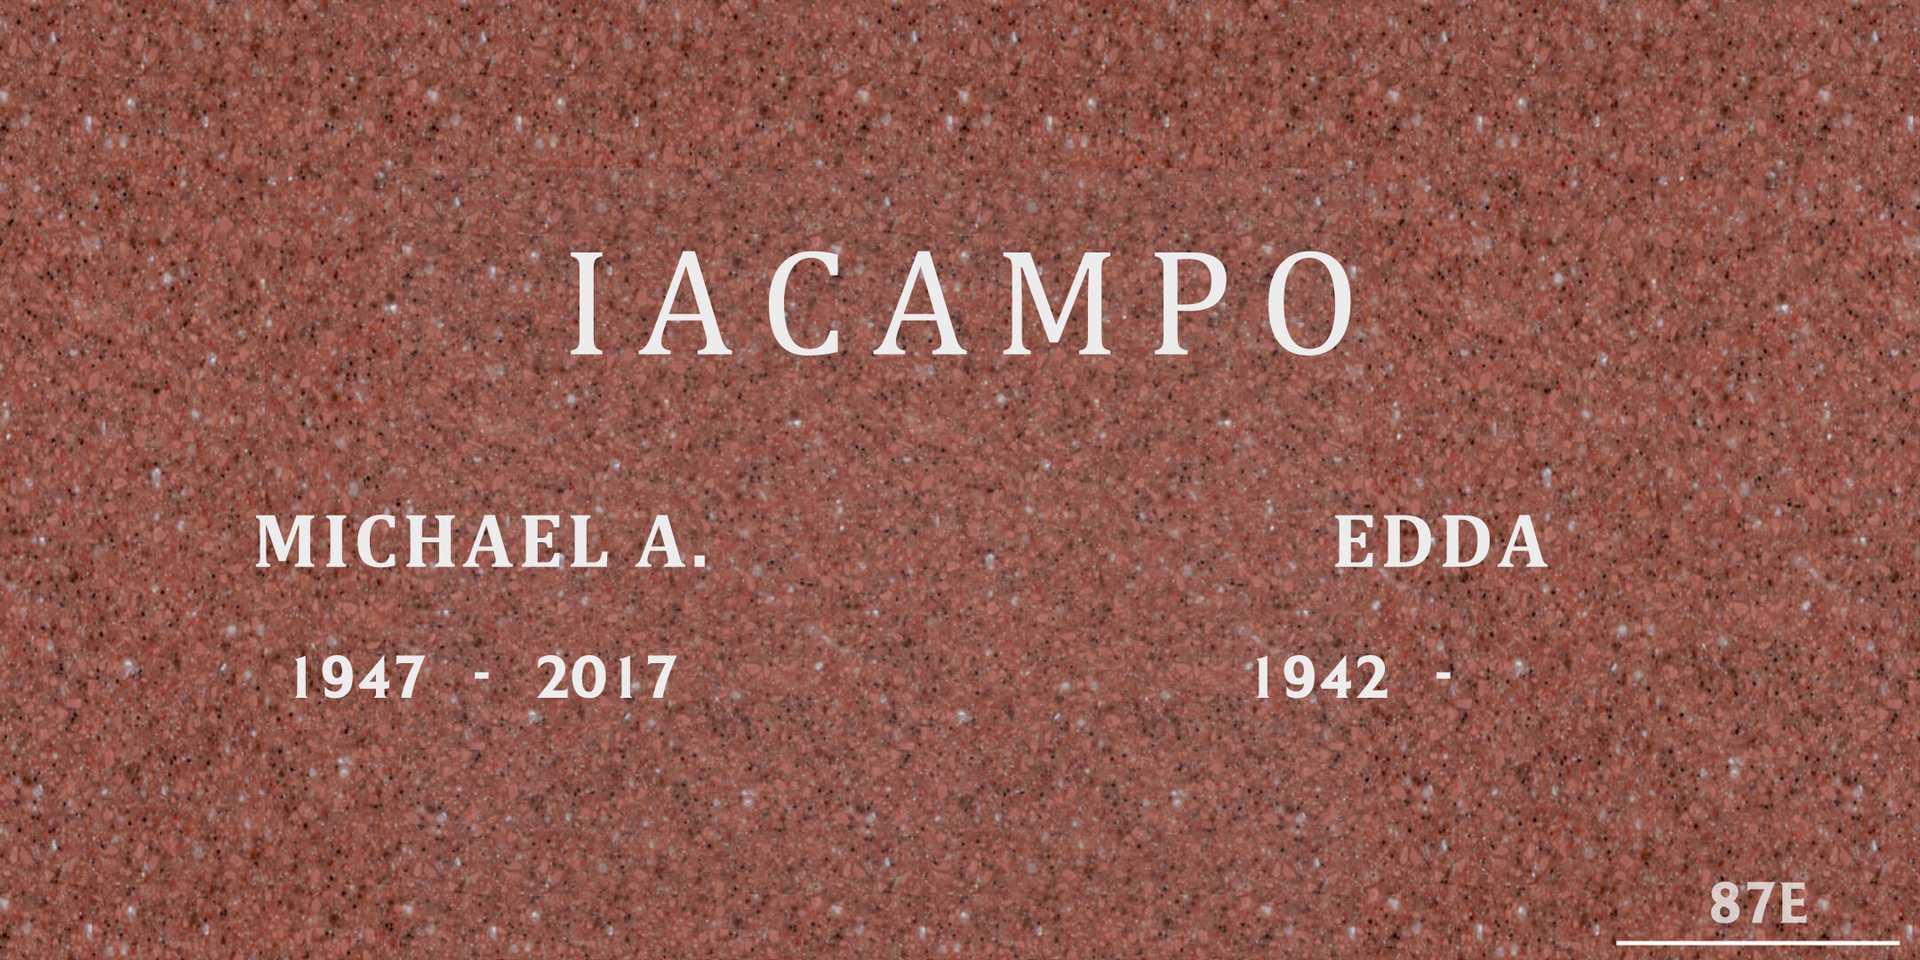 Michael A. Iacampo's grave